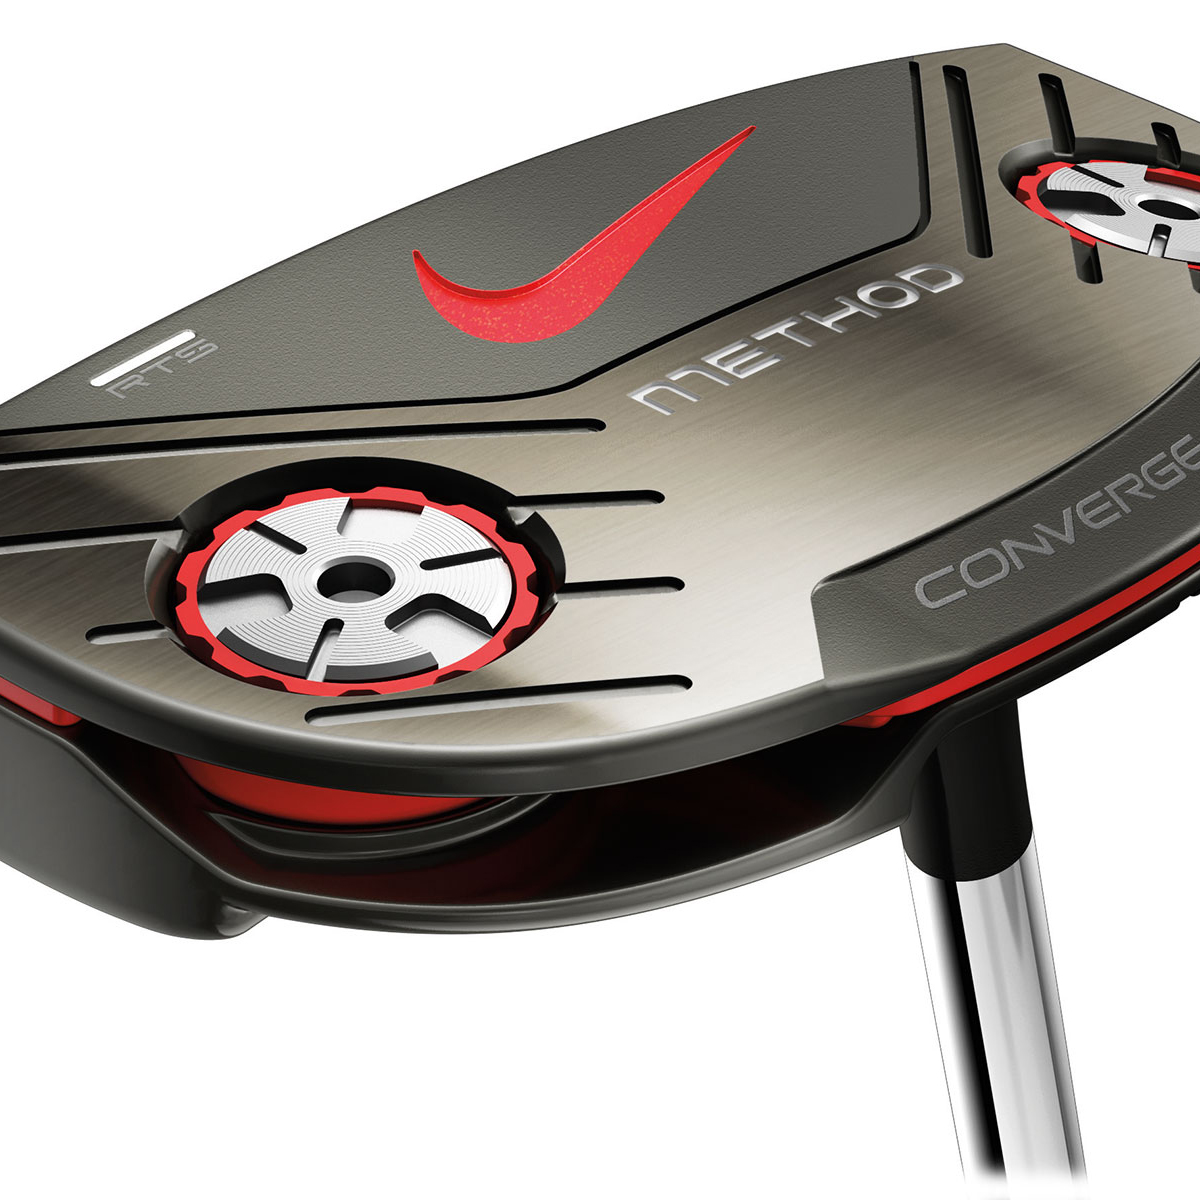 Nike Golf Converge M1-08 Putter Online Golf